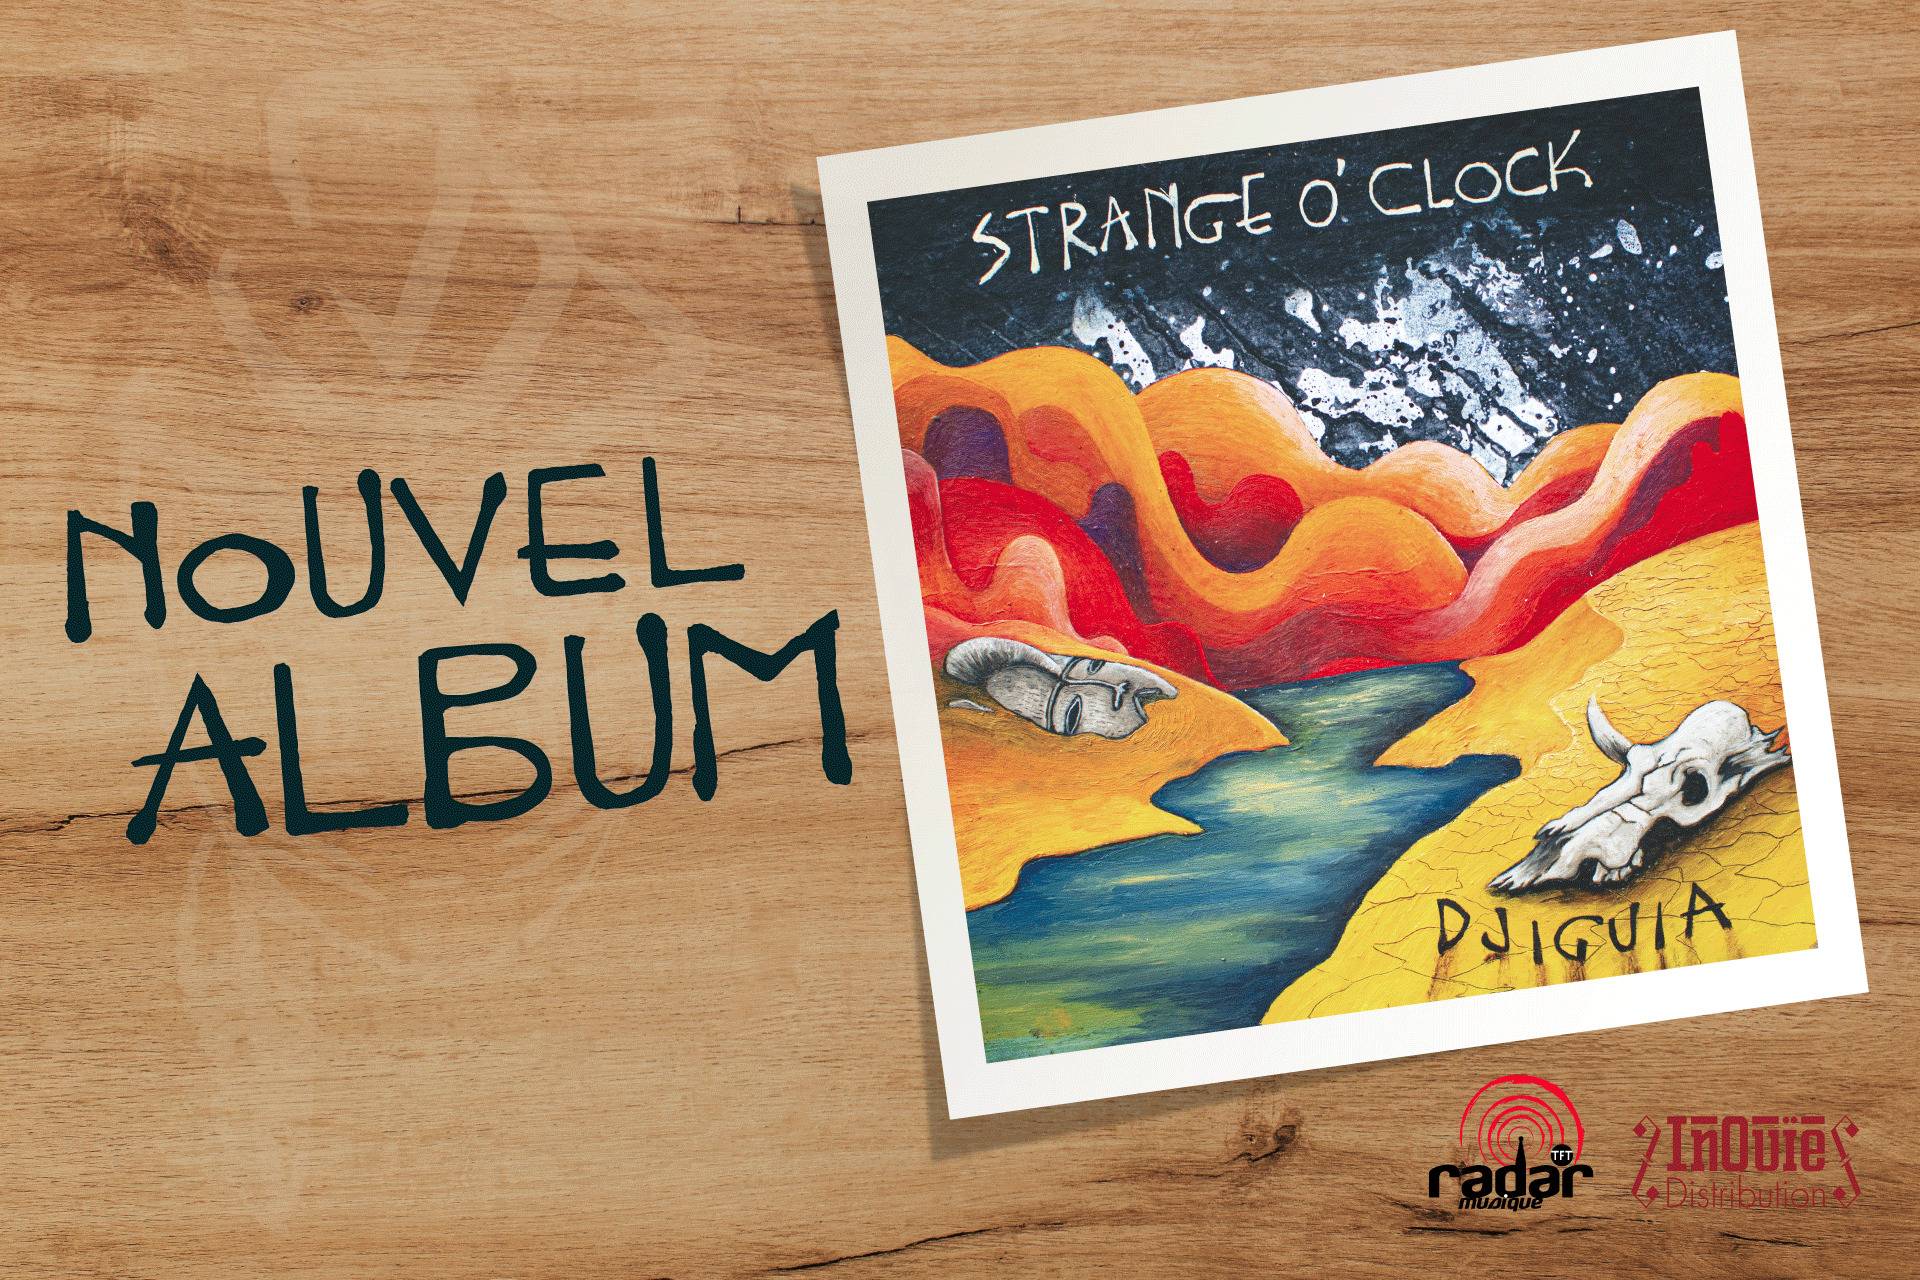 Strange O'Clock Promo nouvel album Djiguia